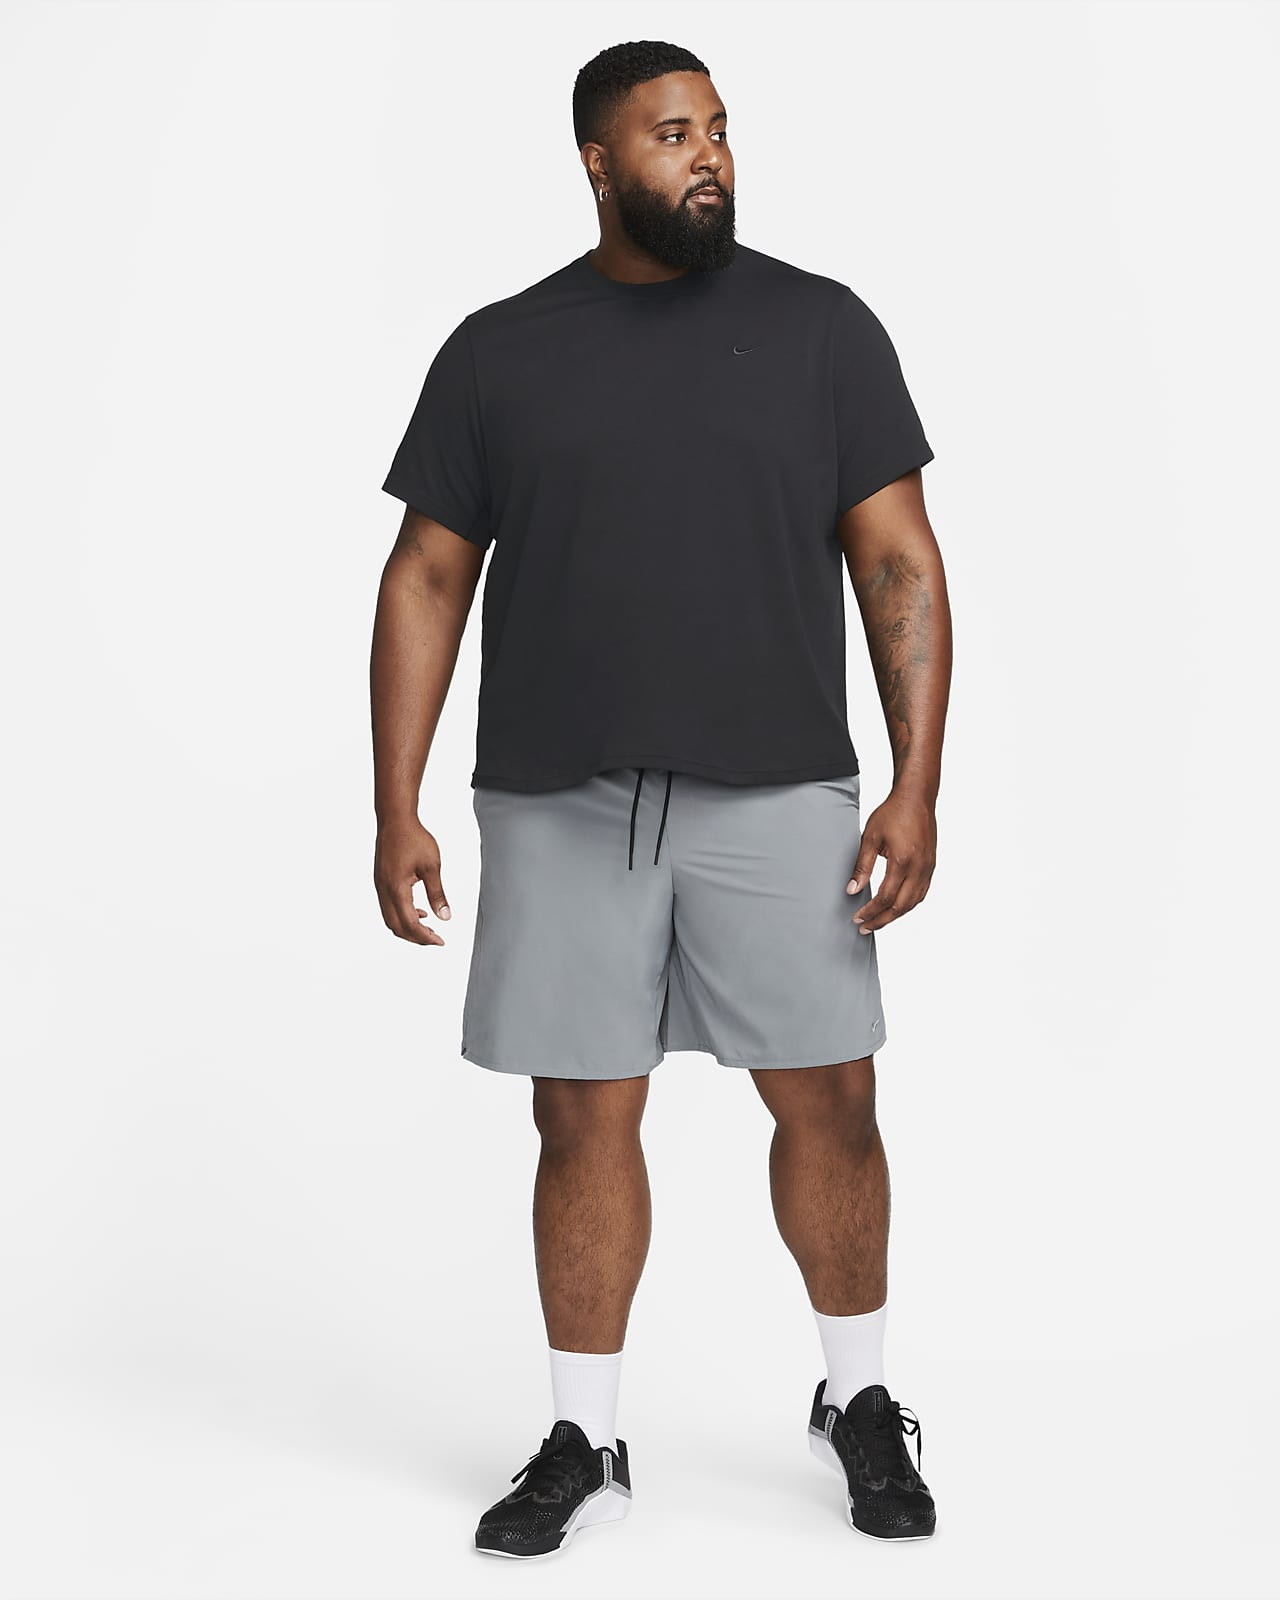 New Nike Yoga Men's Small Training Top Dri-FIT Slim Fit Short Sleeve  CN9822-010